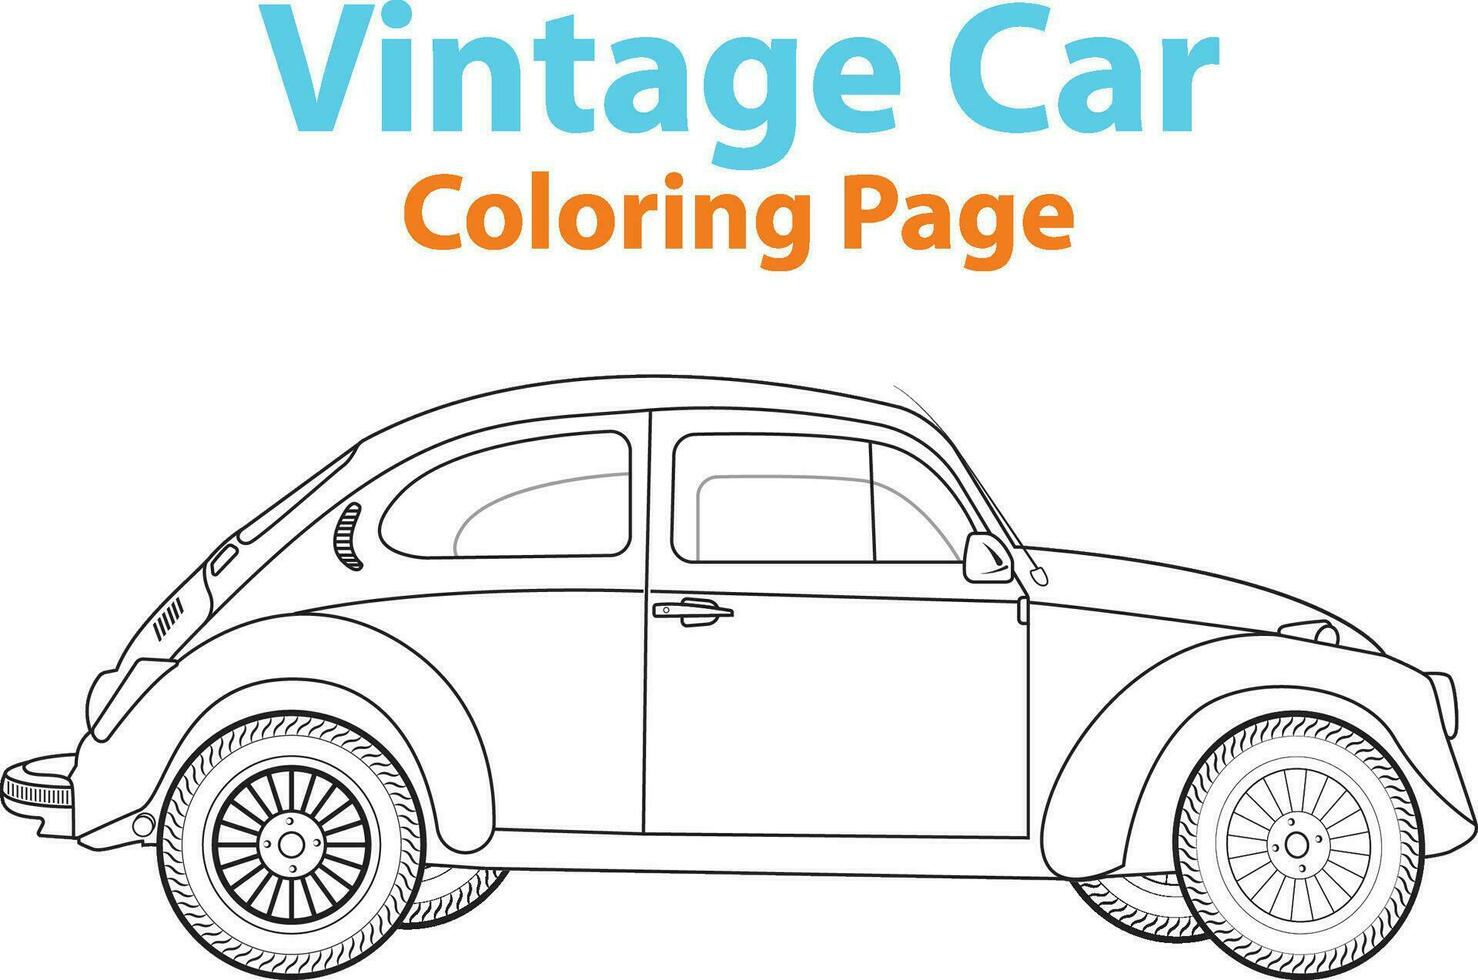 Vintage car illustration vector design for coloring pages.